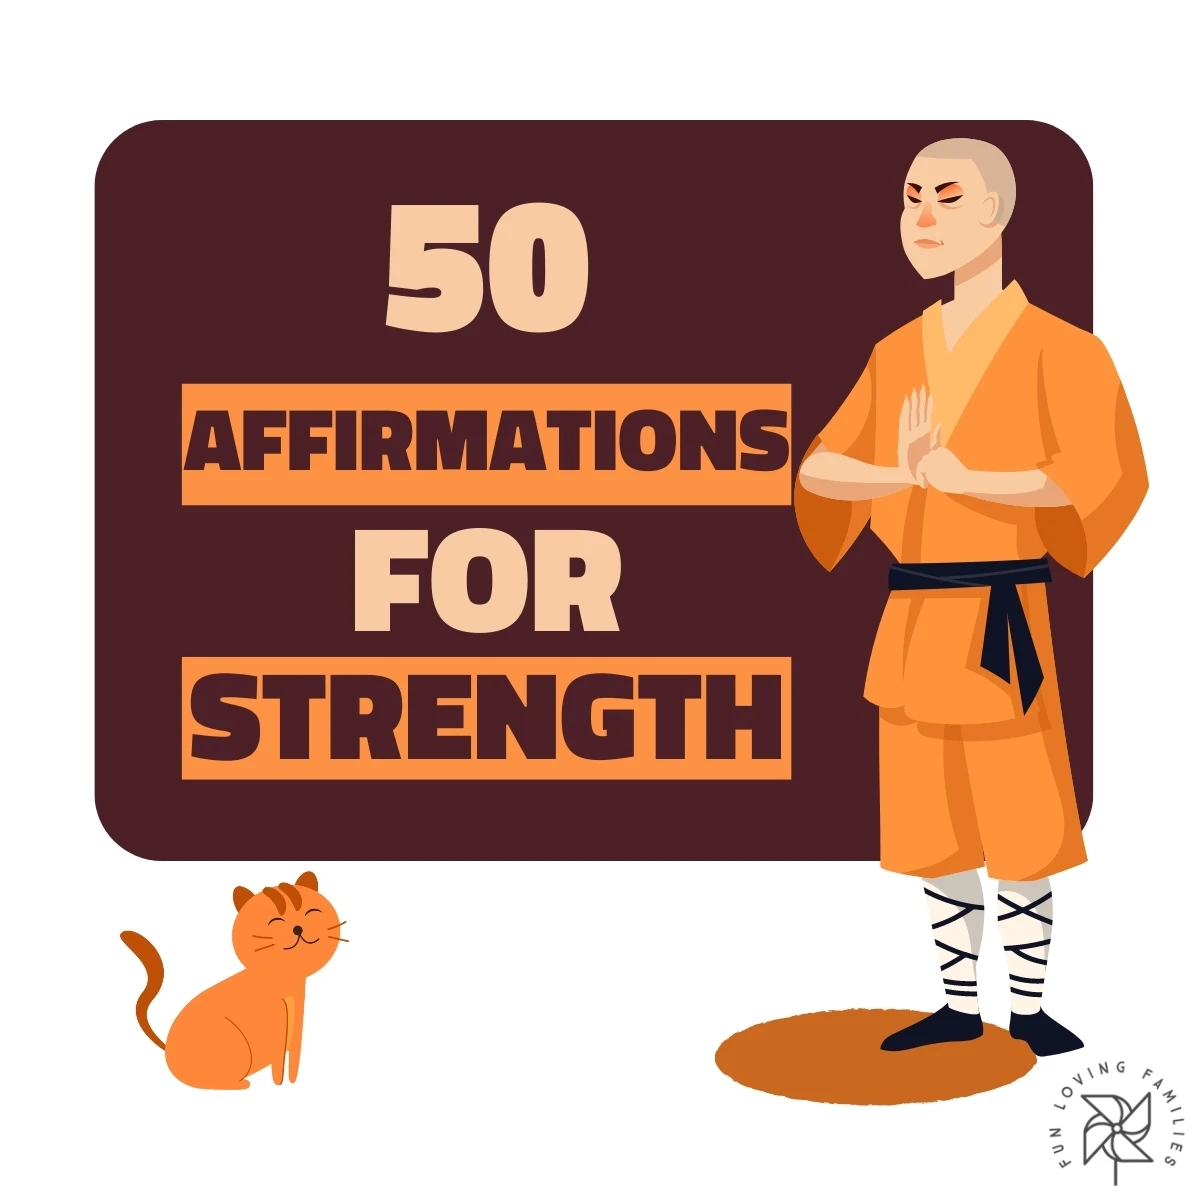 strength affirmations